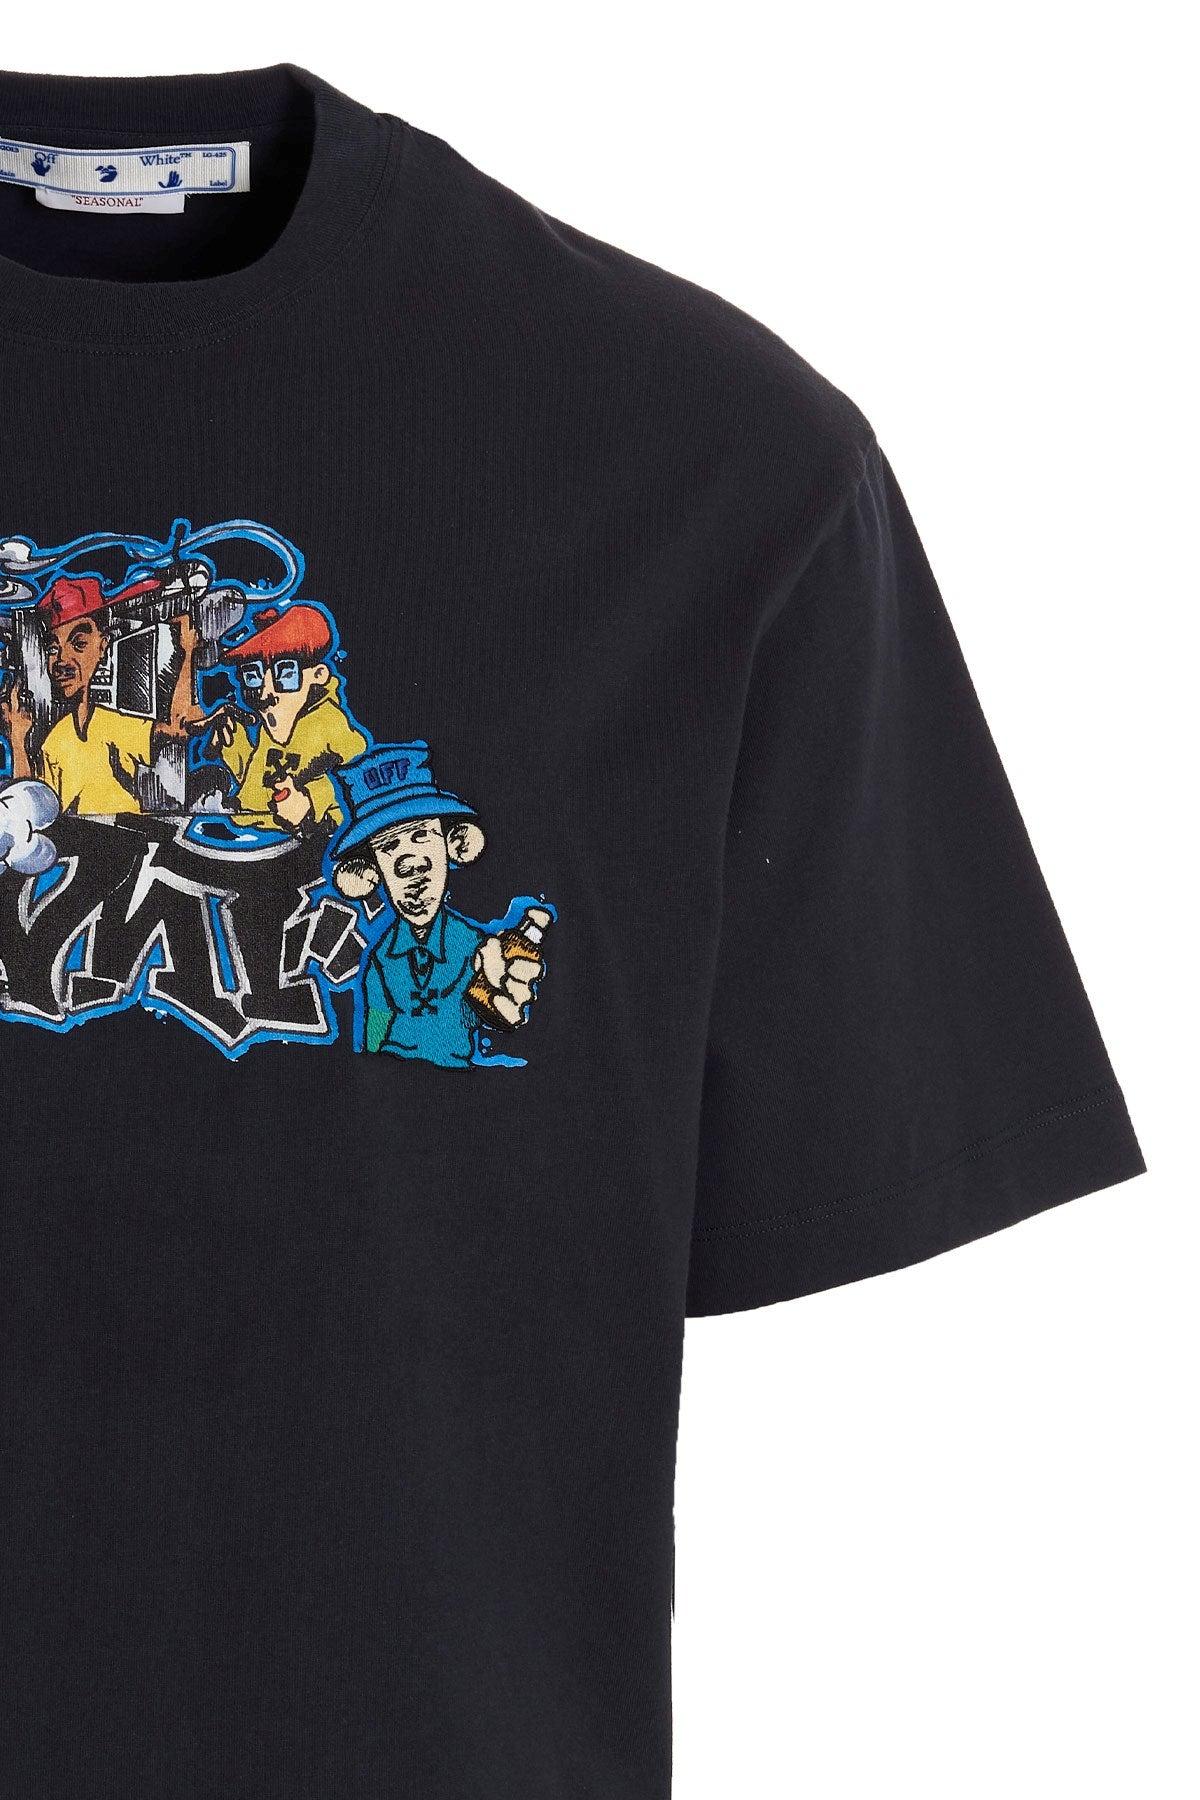 NWT OFF-WHITE C/O VIRGIL ABLOH Blue Graffiti Pupp Skate T-shirt Size M $1480